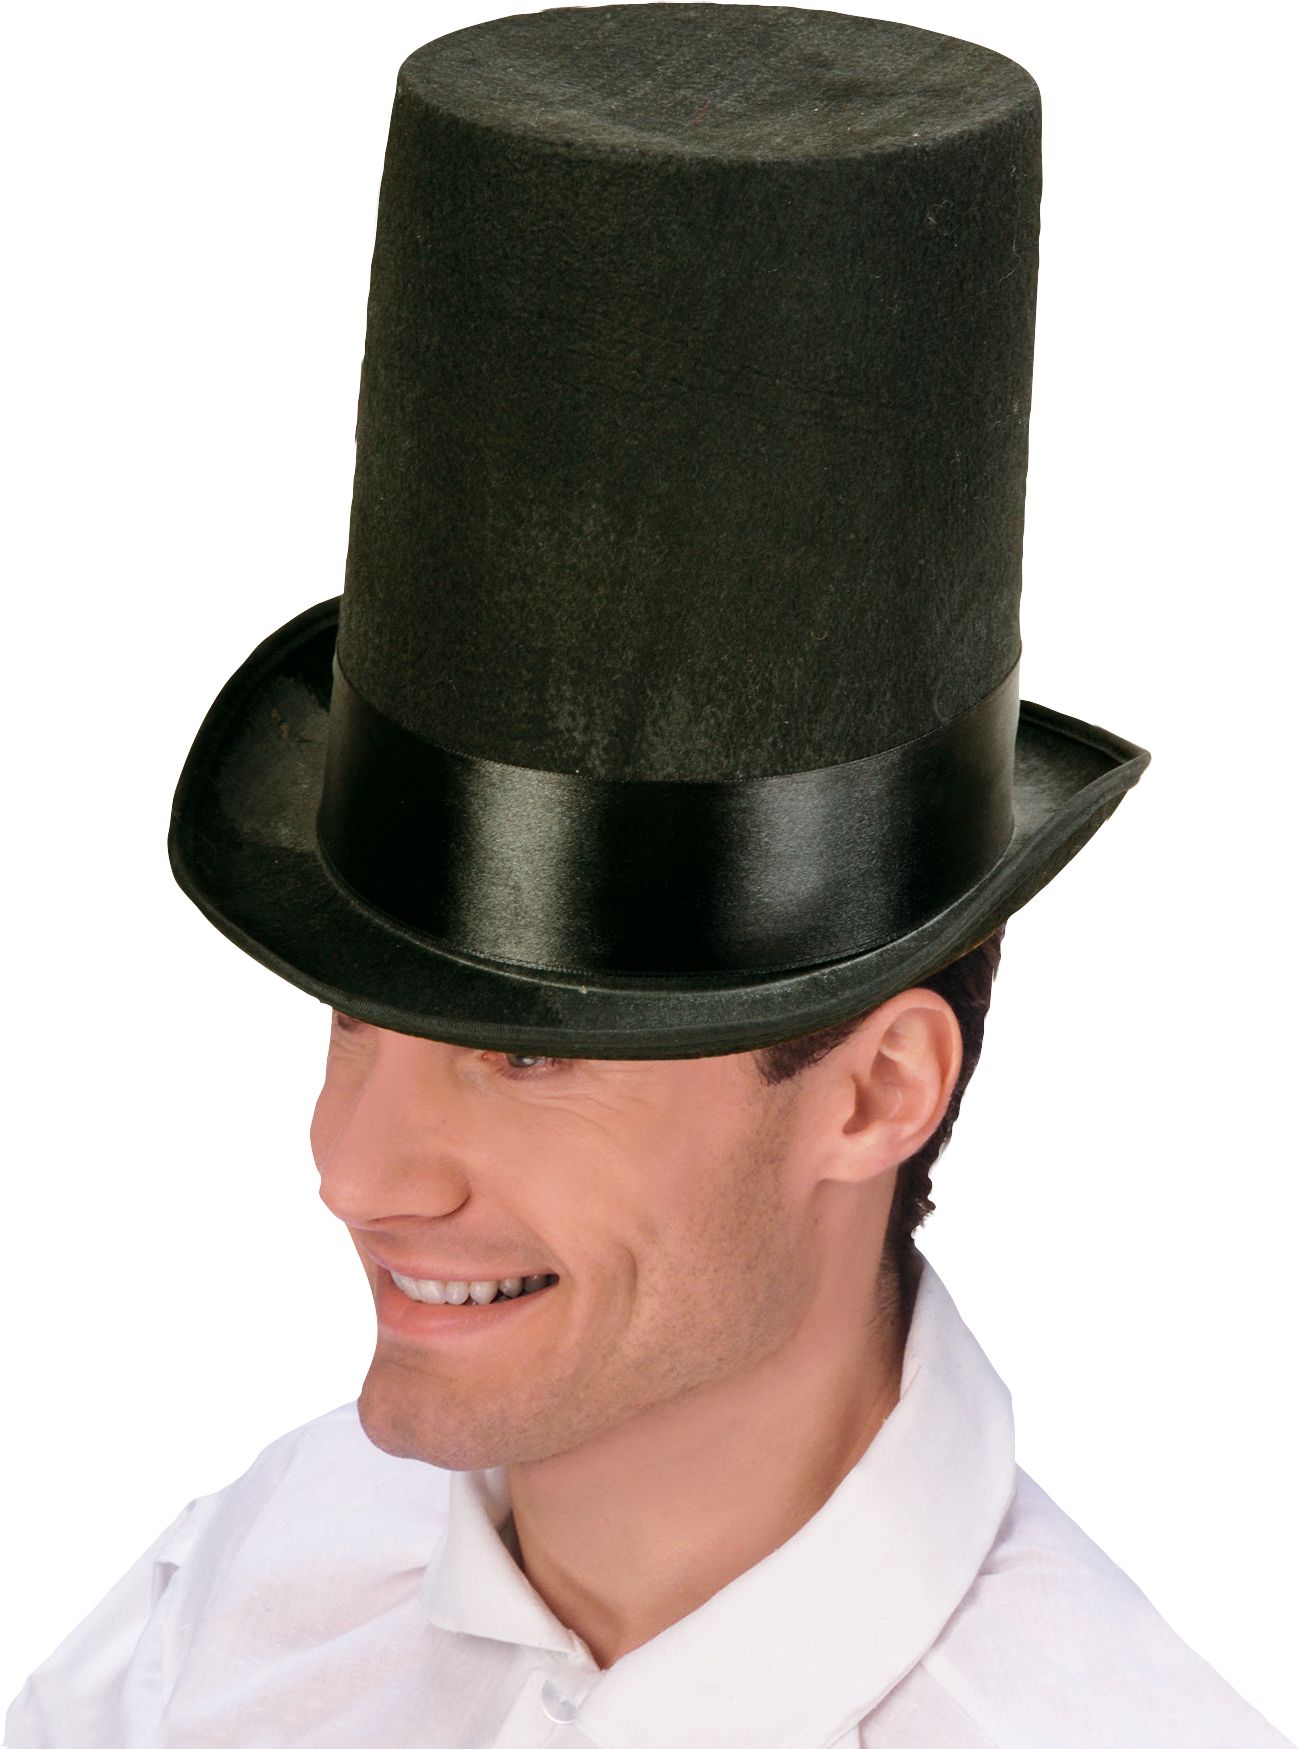 Black Tall Hat - Medium